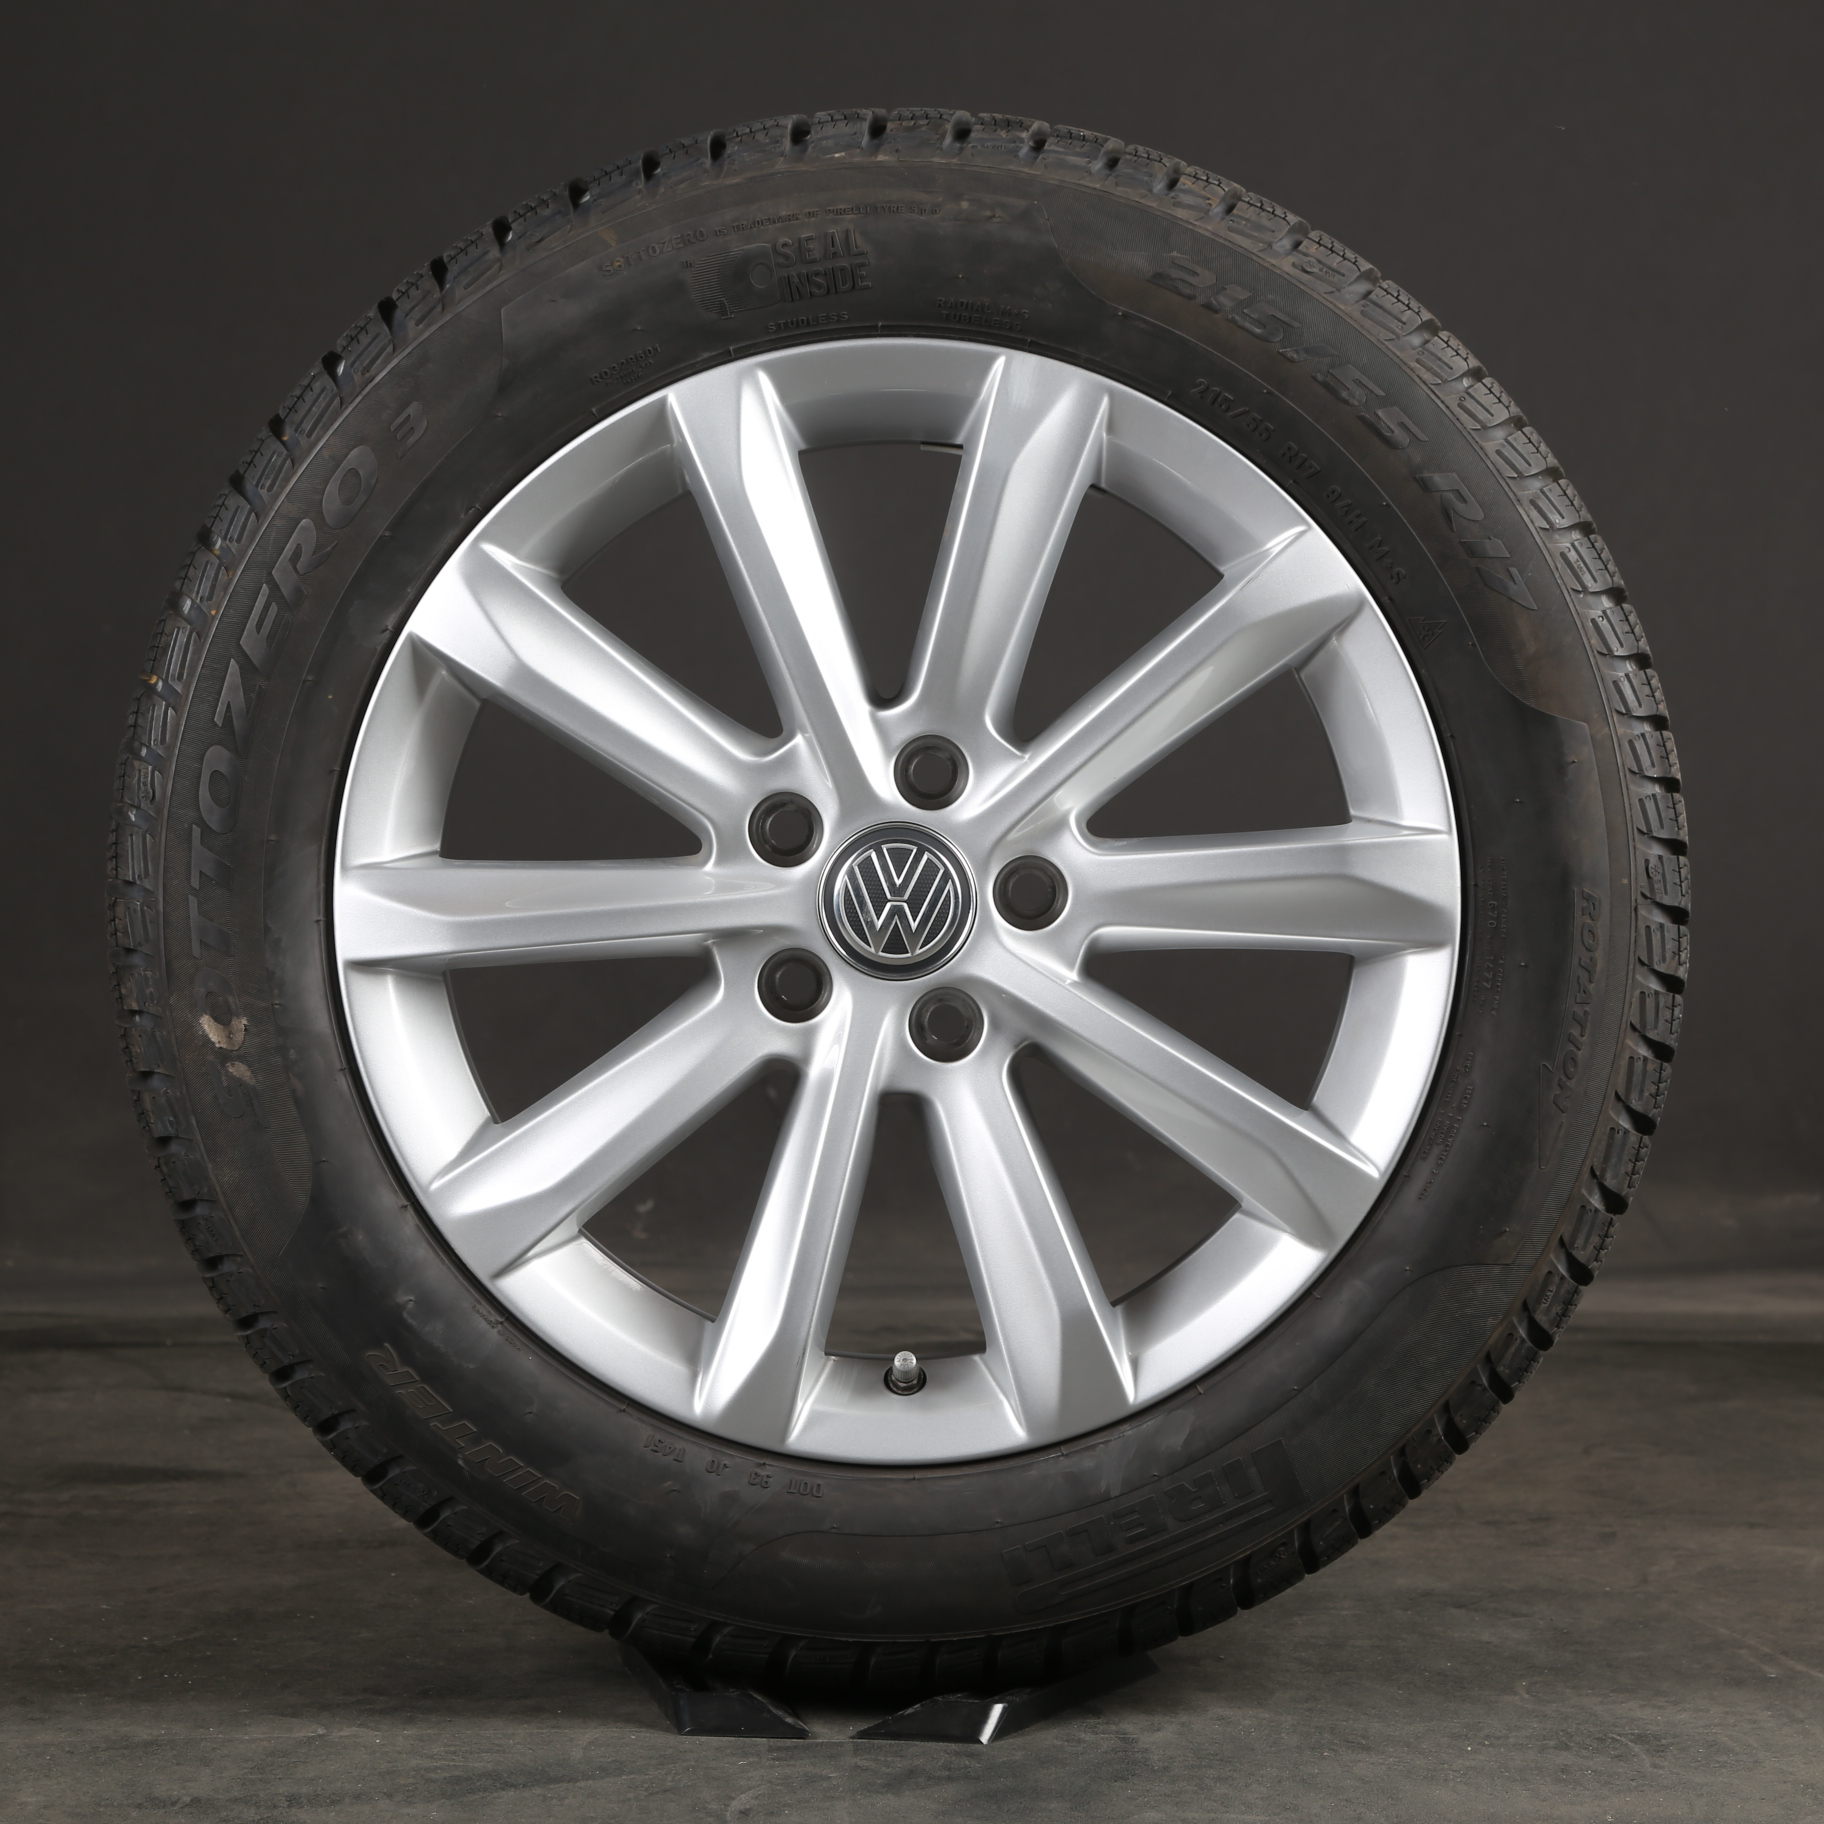 17 pulgadas ruedas de invierno original VW Passat B8 Helsinki 3G0601025C neumáticos de invierno